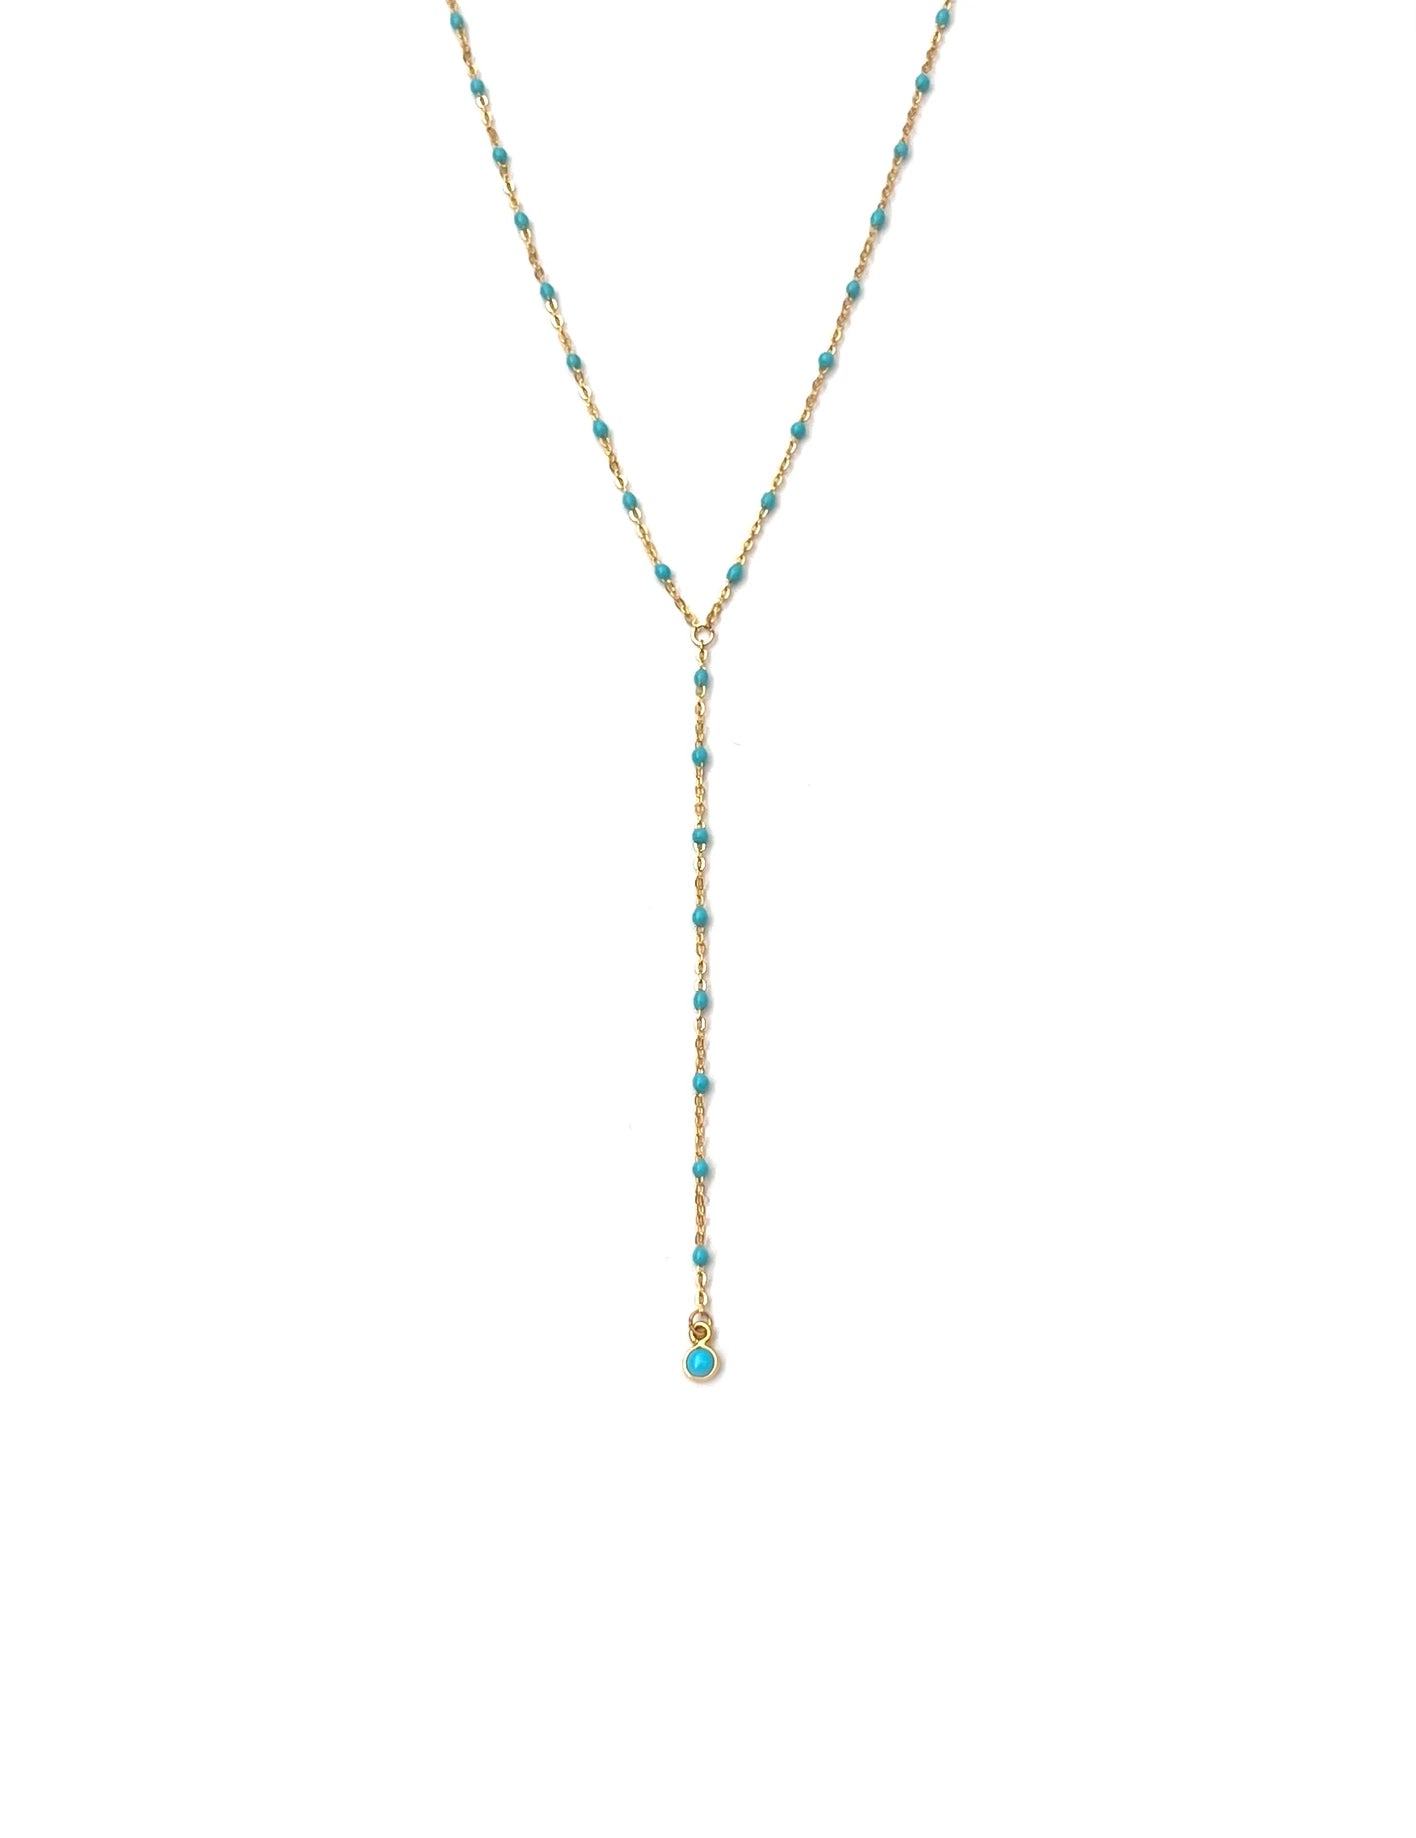 14K Enamel Bead Lariat Necklace with Gemstone Drop - Turquoise